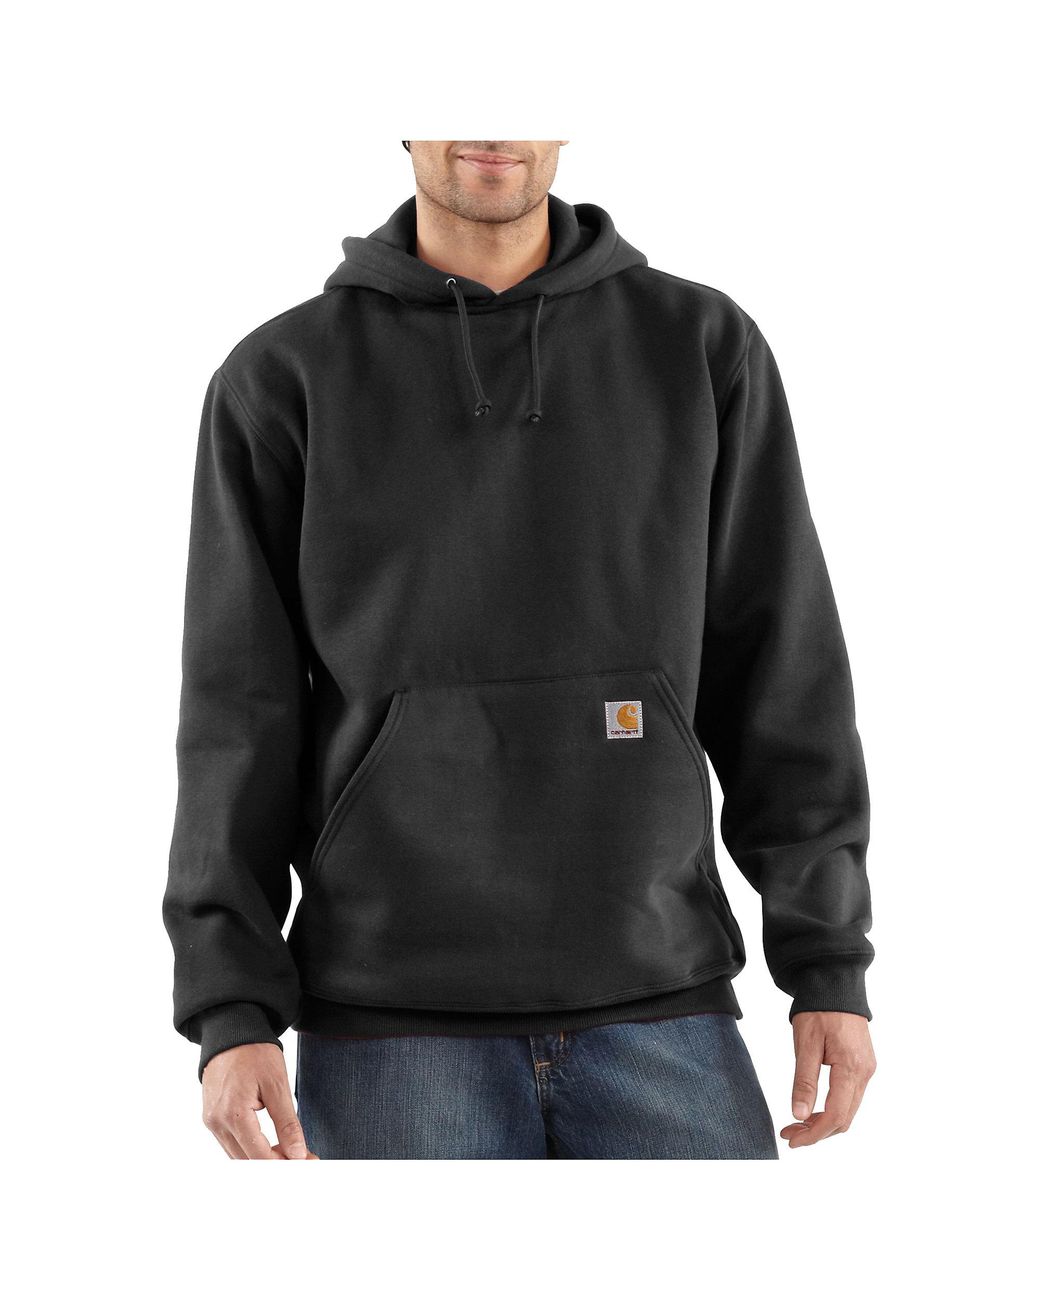 Carhartt Synthetic Midweight Hooded Sweatshirt in Black for Men - Lyst